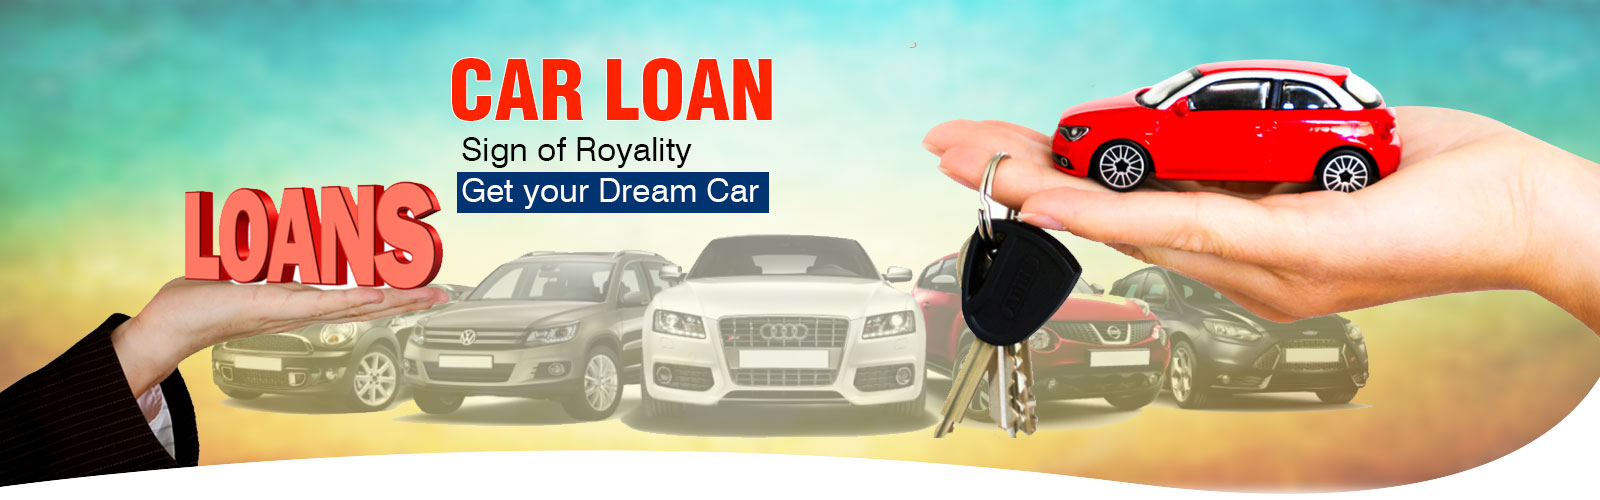 Car-Loan